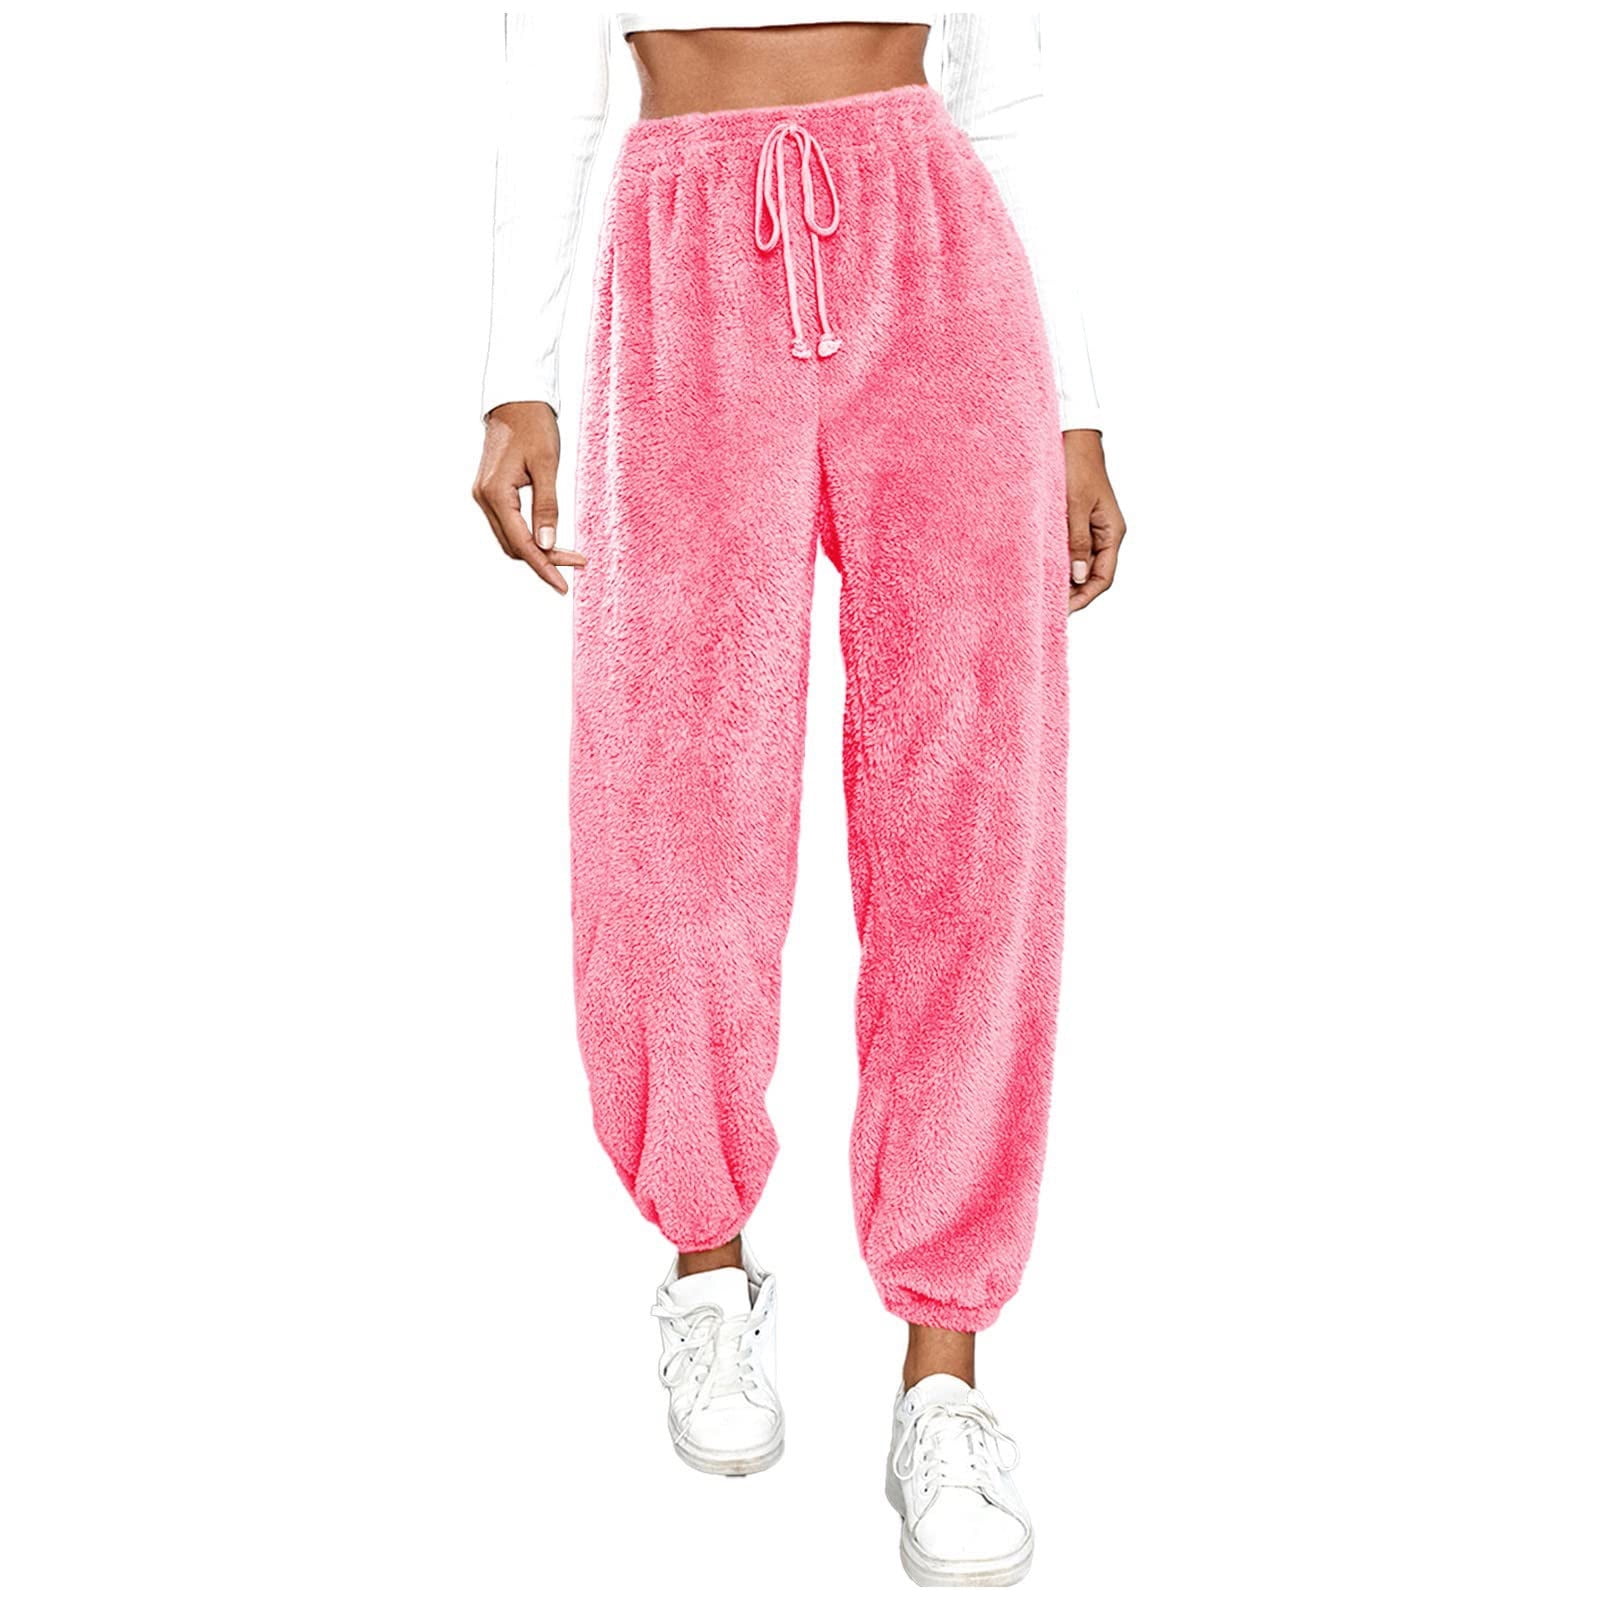 HAPIMO Sales Womens Fuzzy Fleece Pants Warm Cozy Pjs Bottoms Fleece  Sweatpants Pants Fluffy Sleepwear with Drawstring Hot Pink L